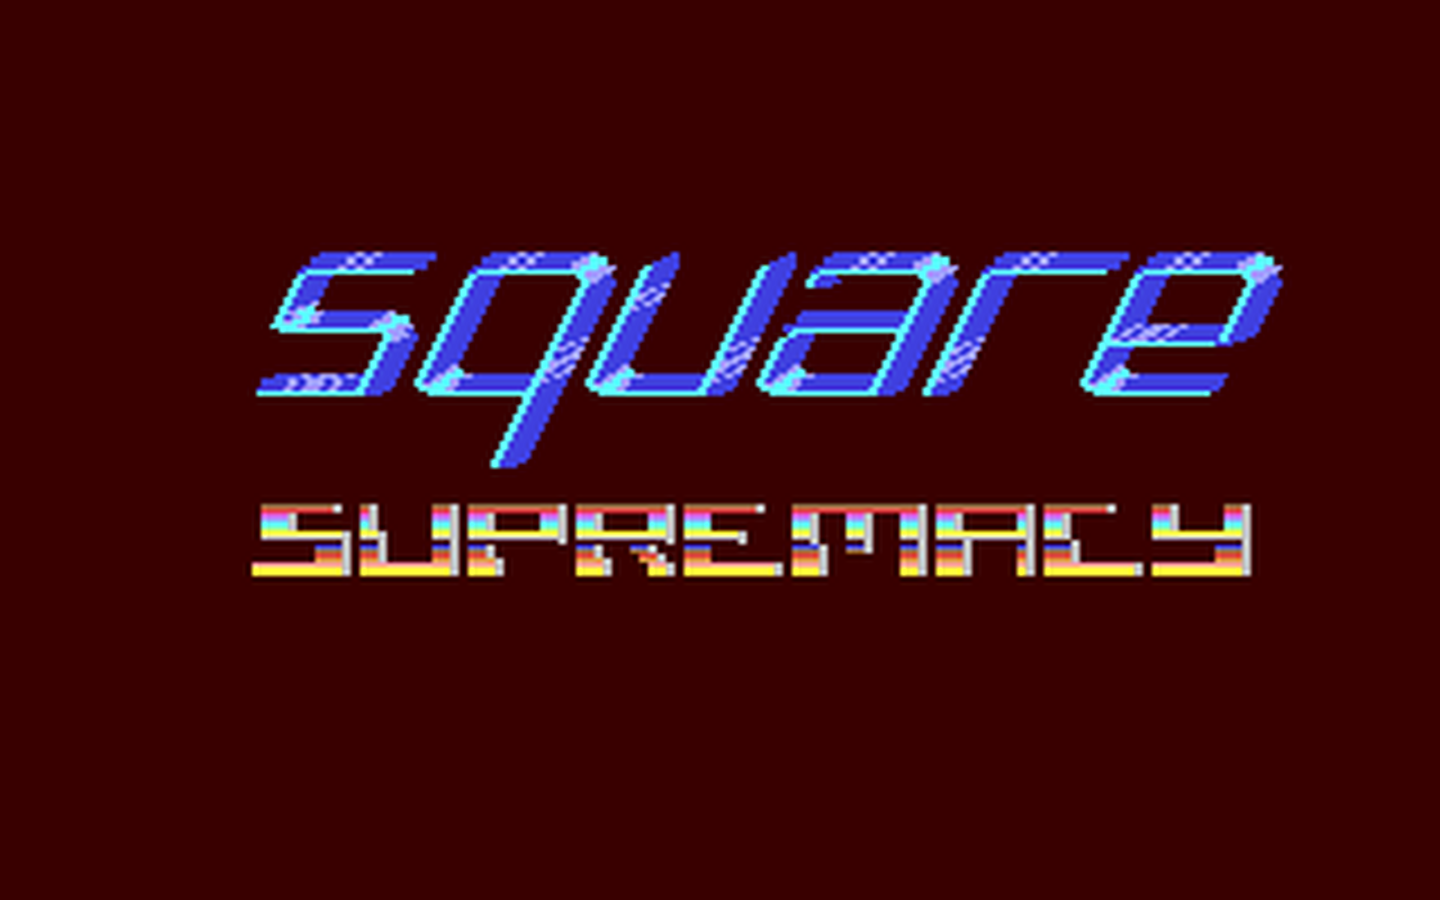 C64 GameBase Square_Supremacy 1991